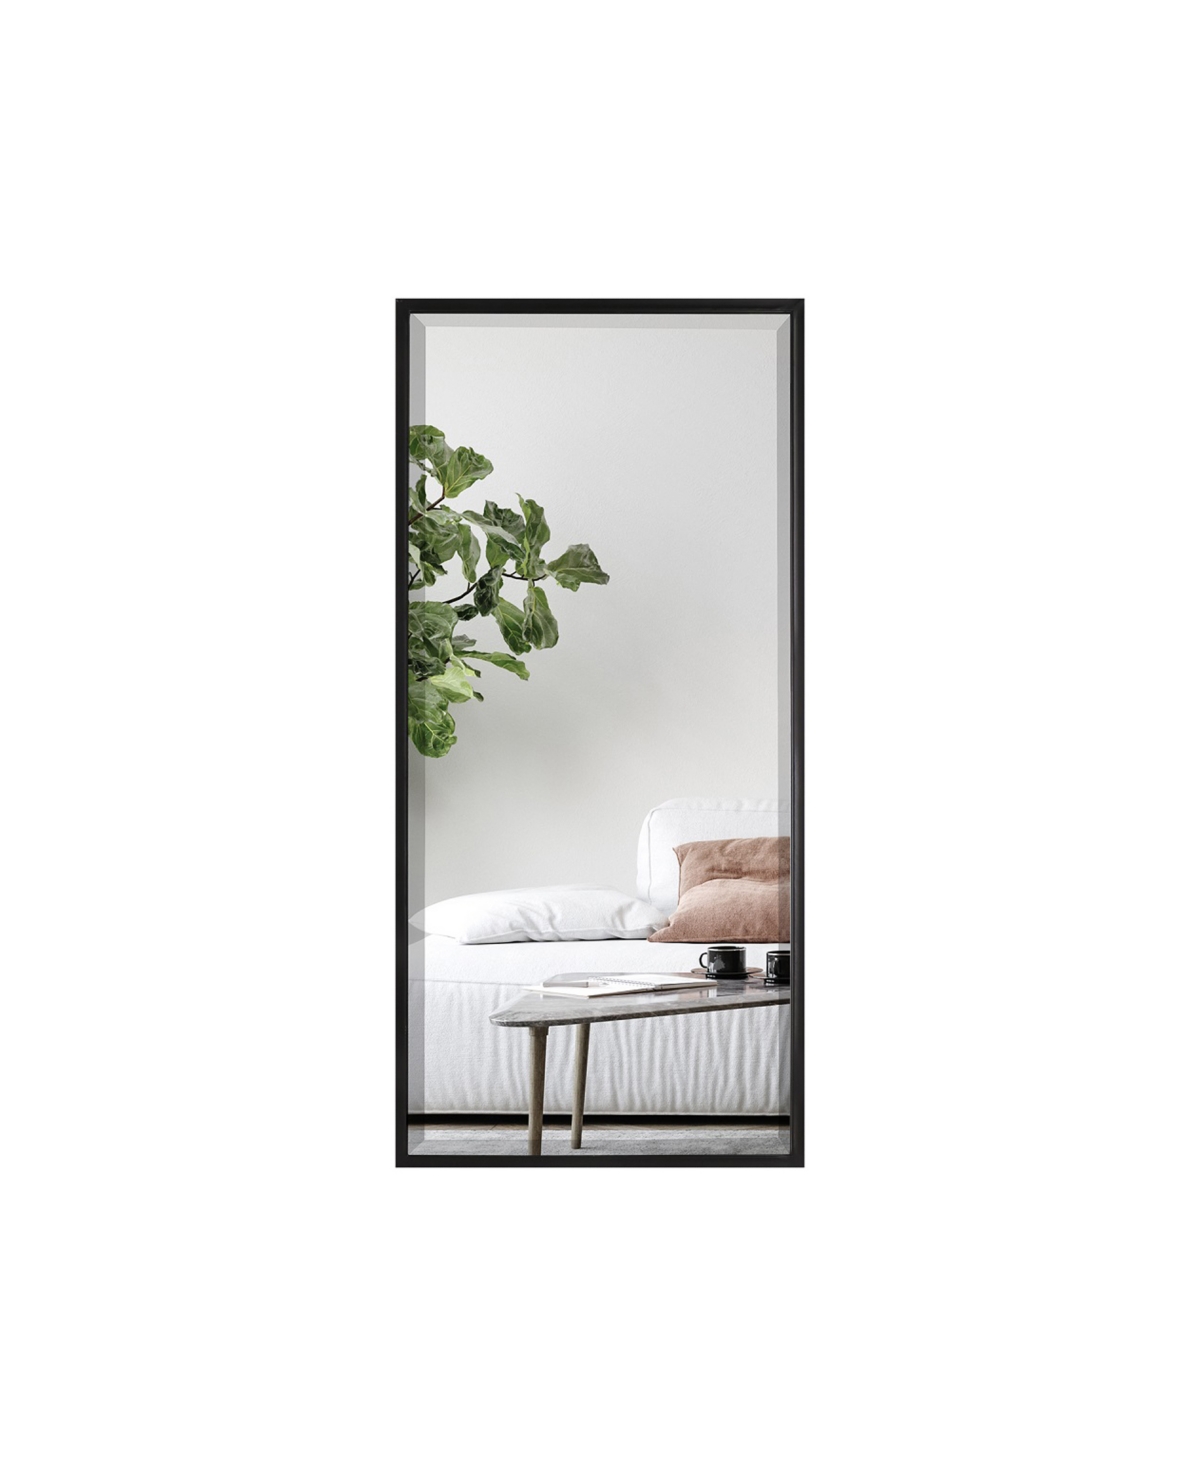 Rectangular Framed Bathroom Vanity Wall Mirror, 35" x 16" - Black